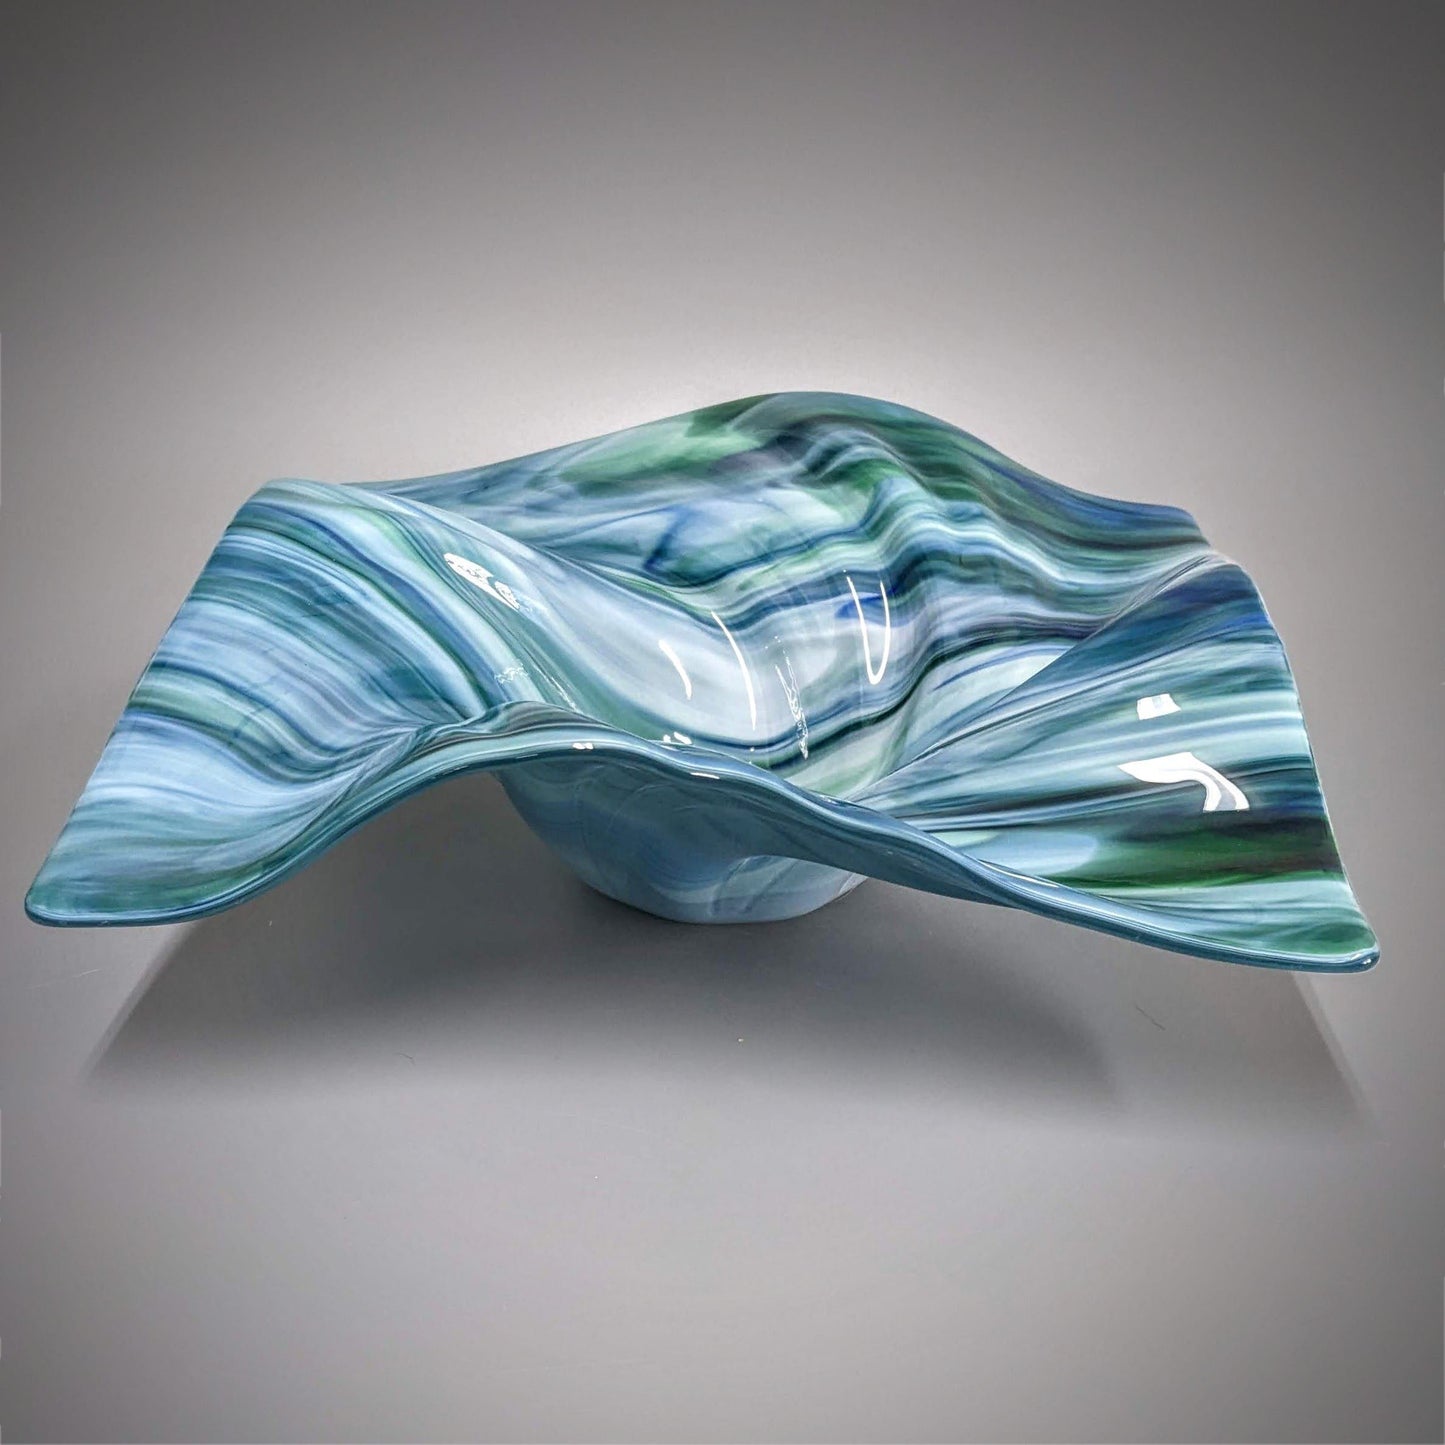 Glass Art Wave Bowl in Aqua Teal Blues and Greens